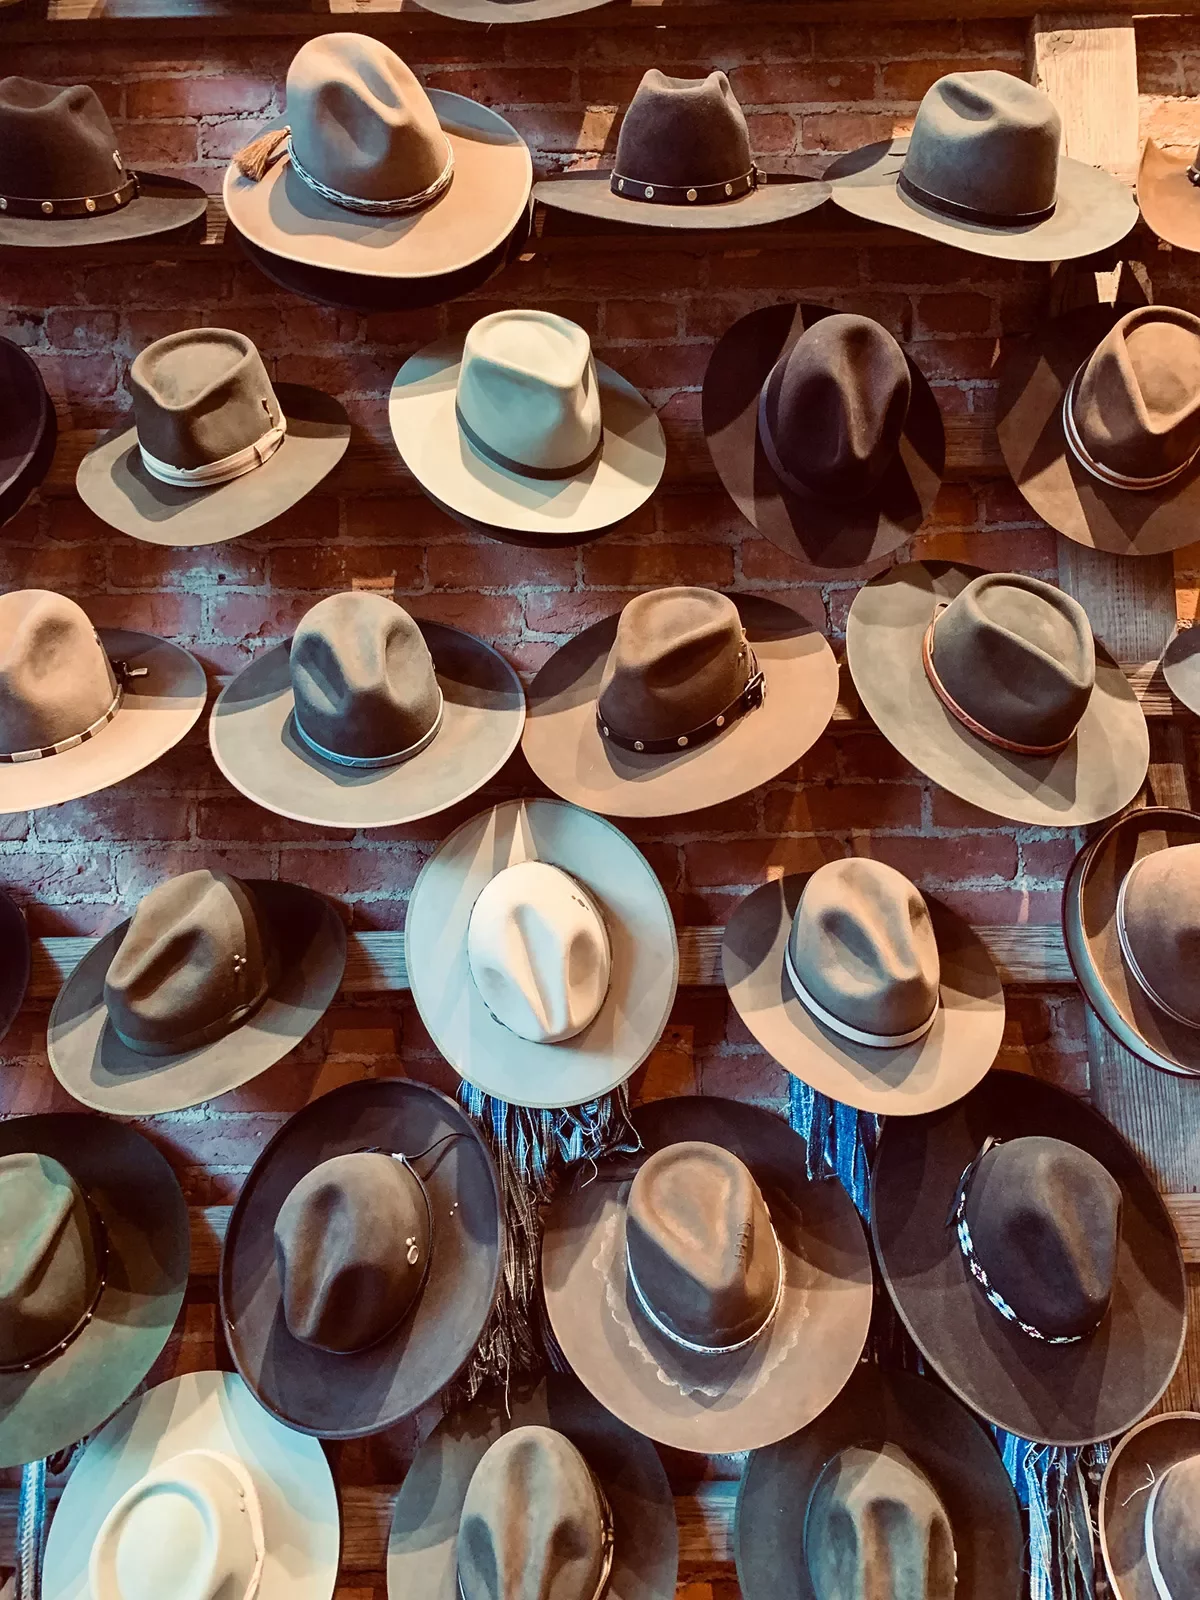 Colorful display of cowboy hats